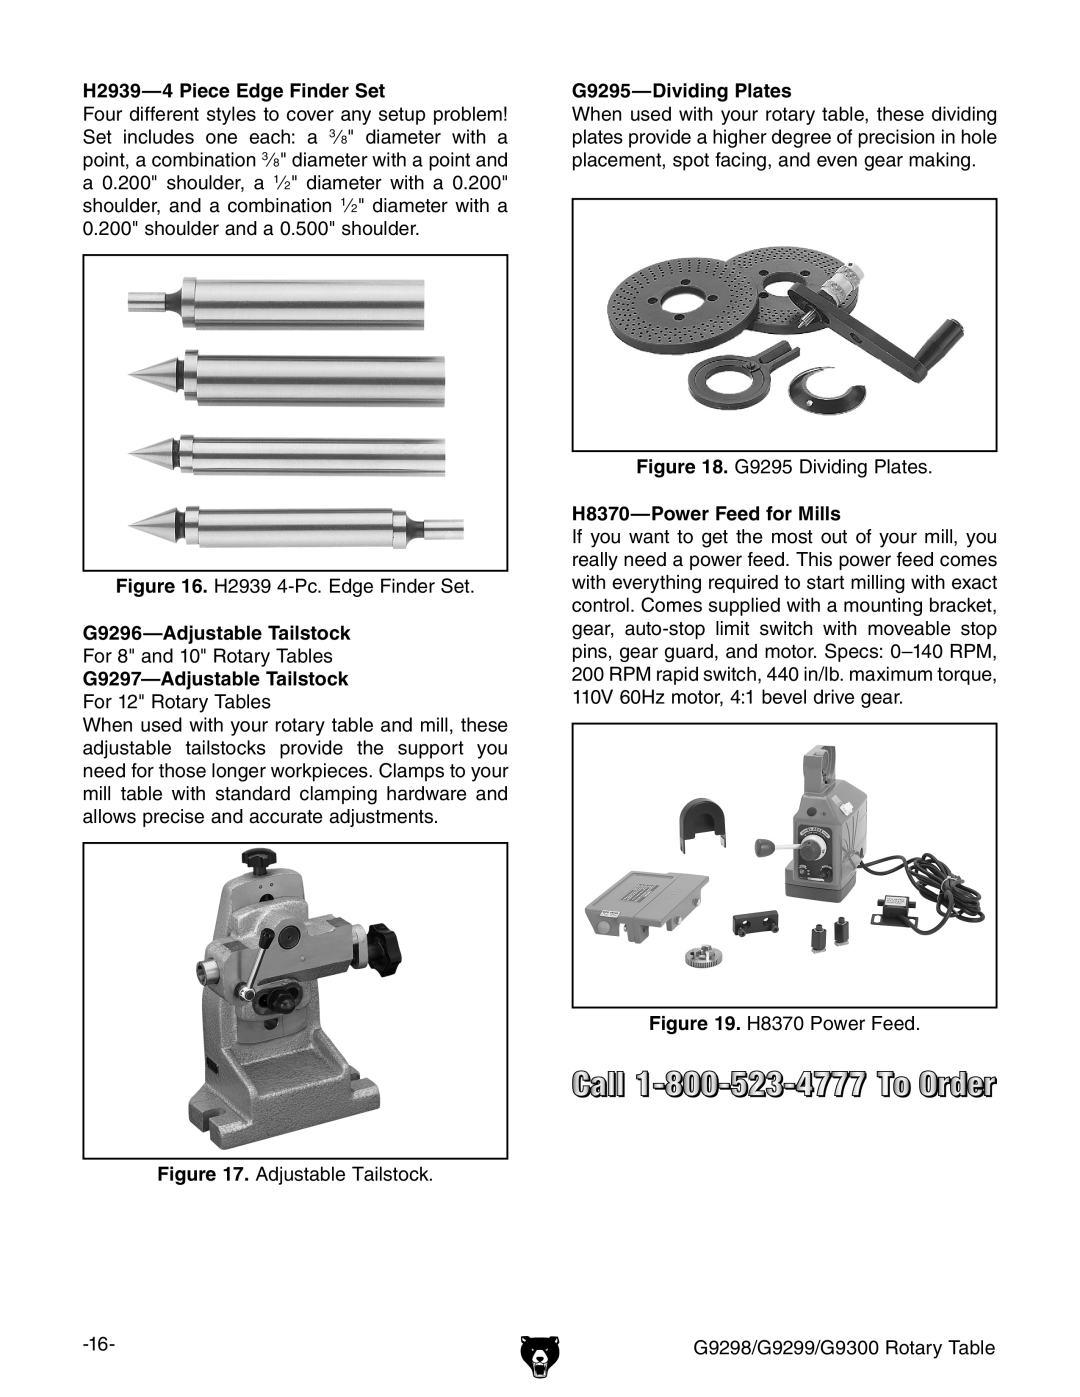 Grizzly G9298 H2939-4 Piece Edge Finder Set, G9296-Adjustable Tailstock, G9297-Adjustable Tailstock, G9295-Dividing Plates 